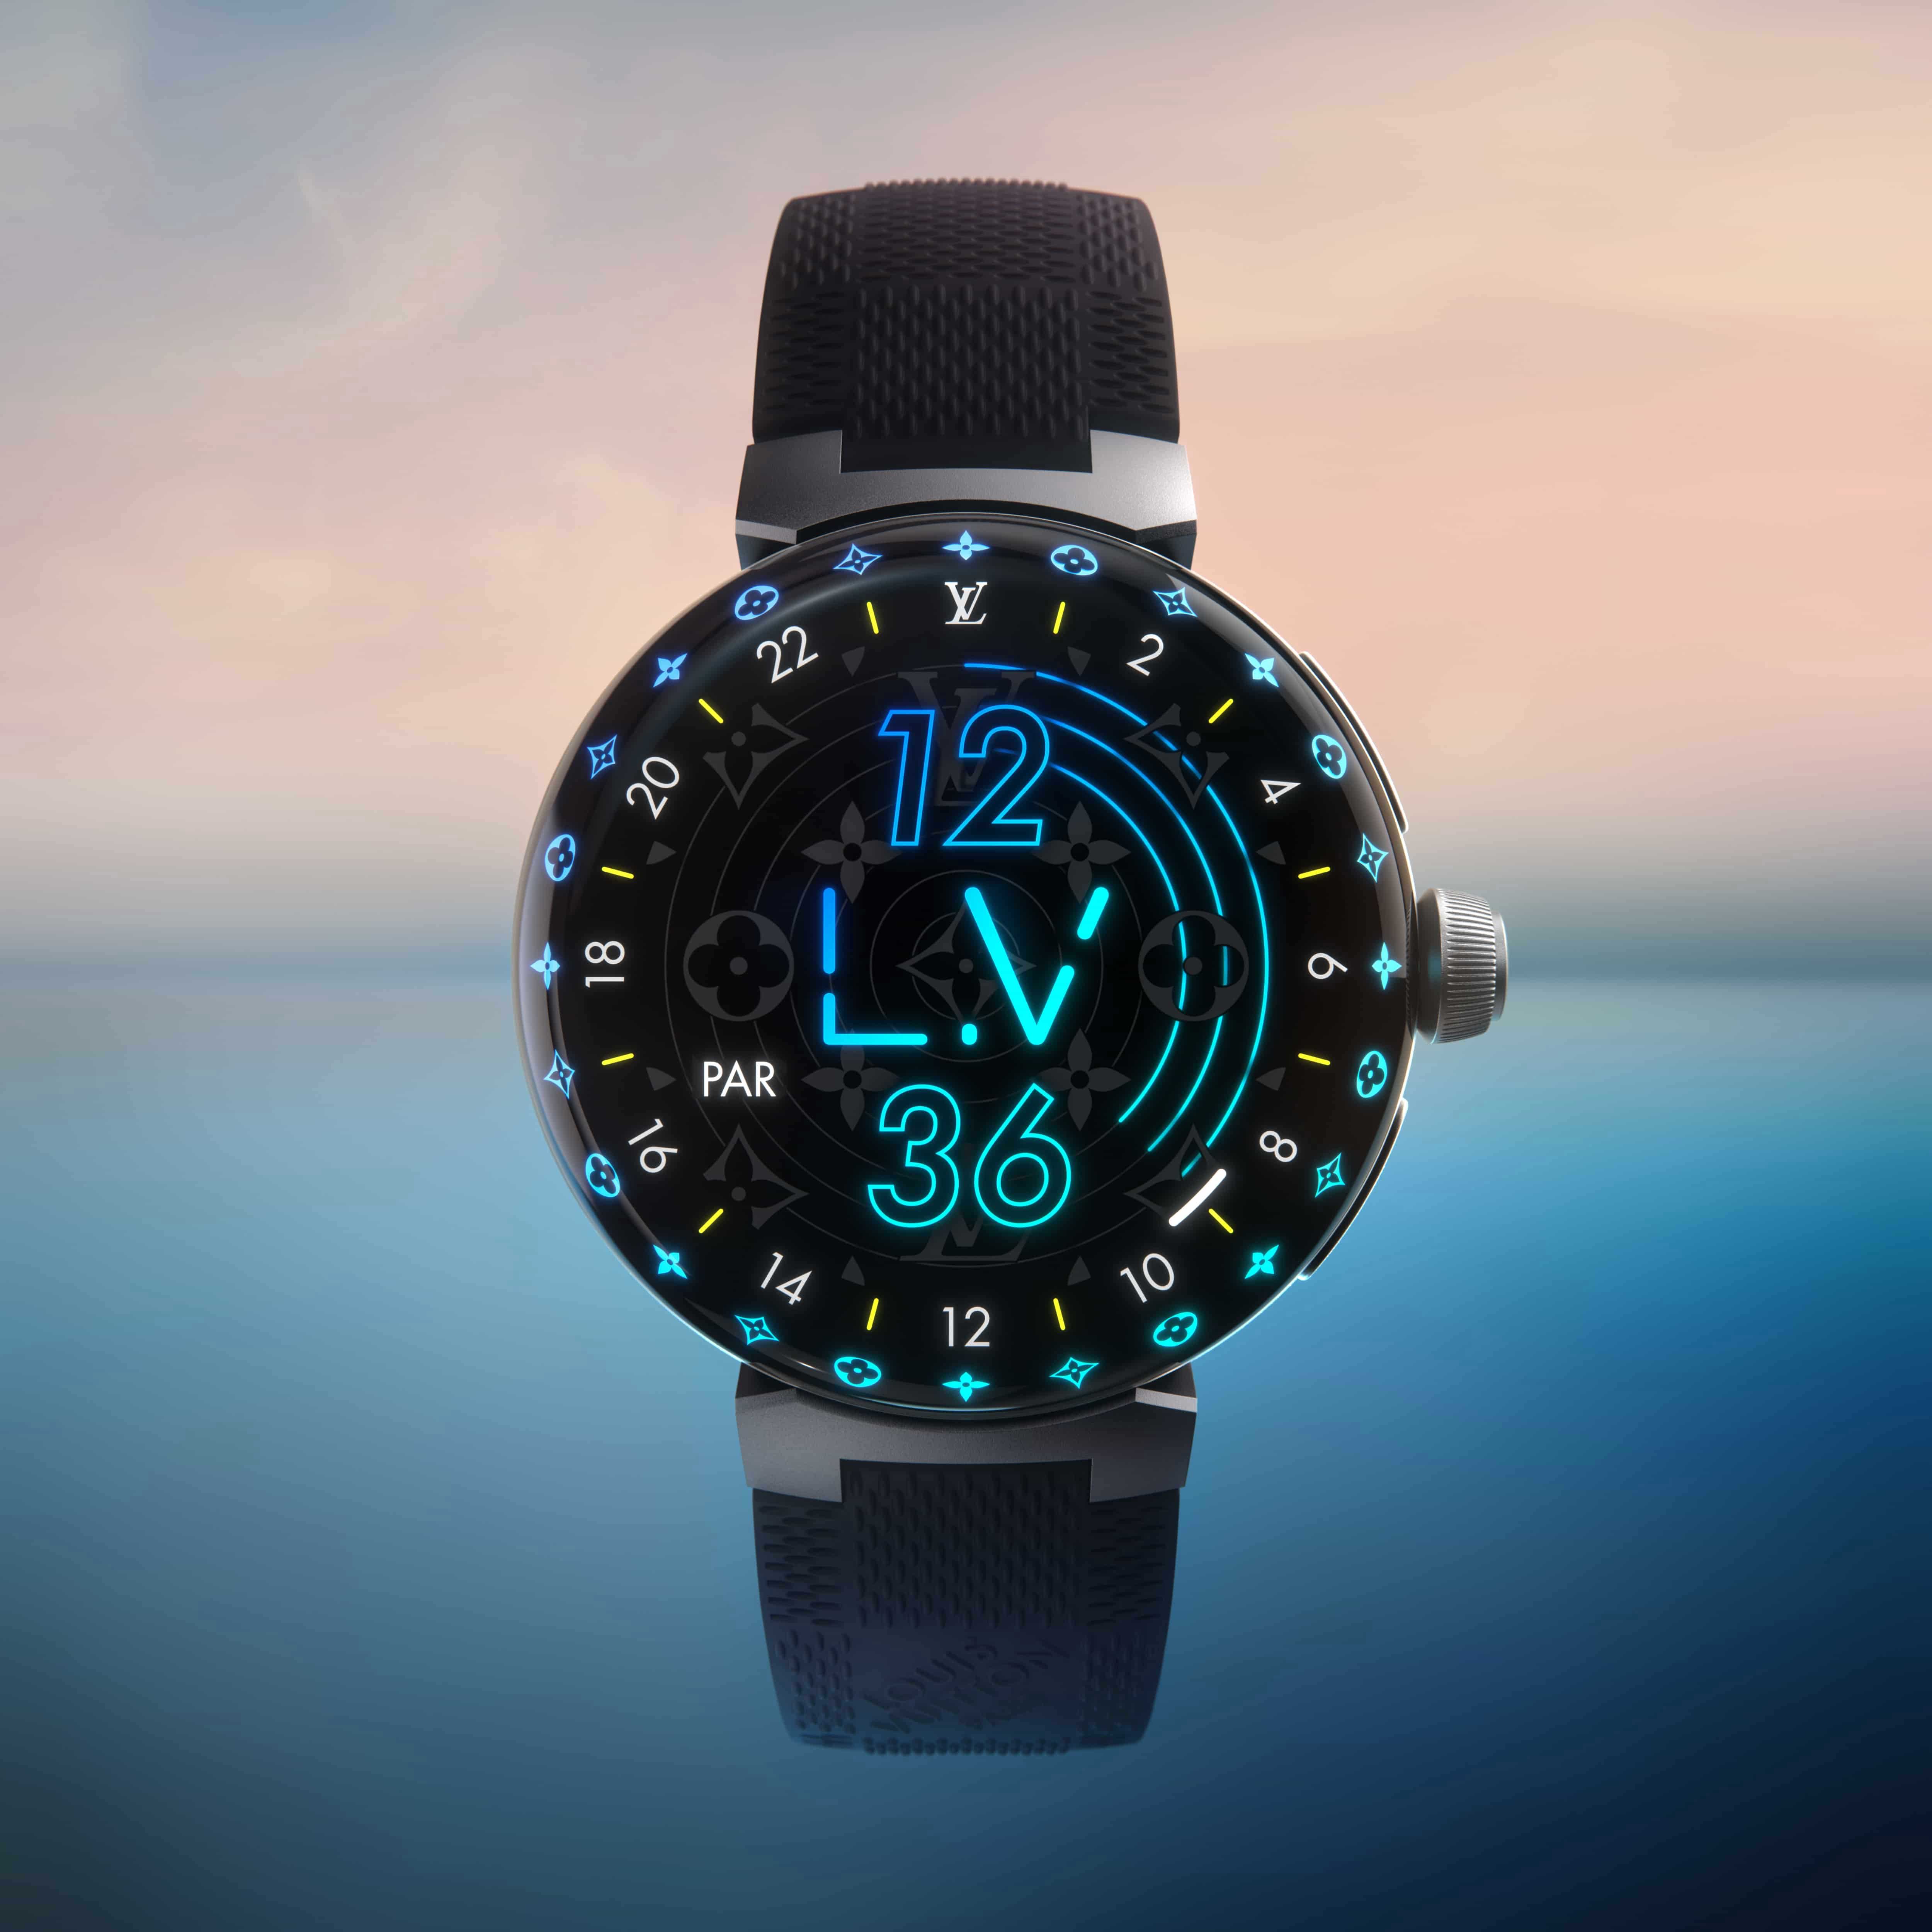 Louis Vuitton Tambour Horizon Light Up Connected Watch